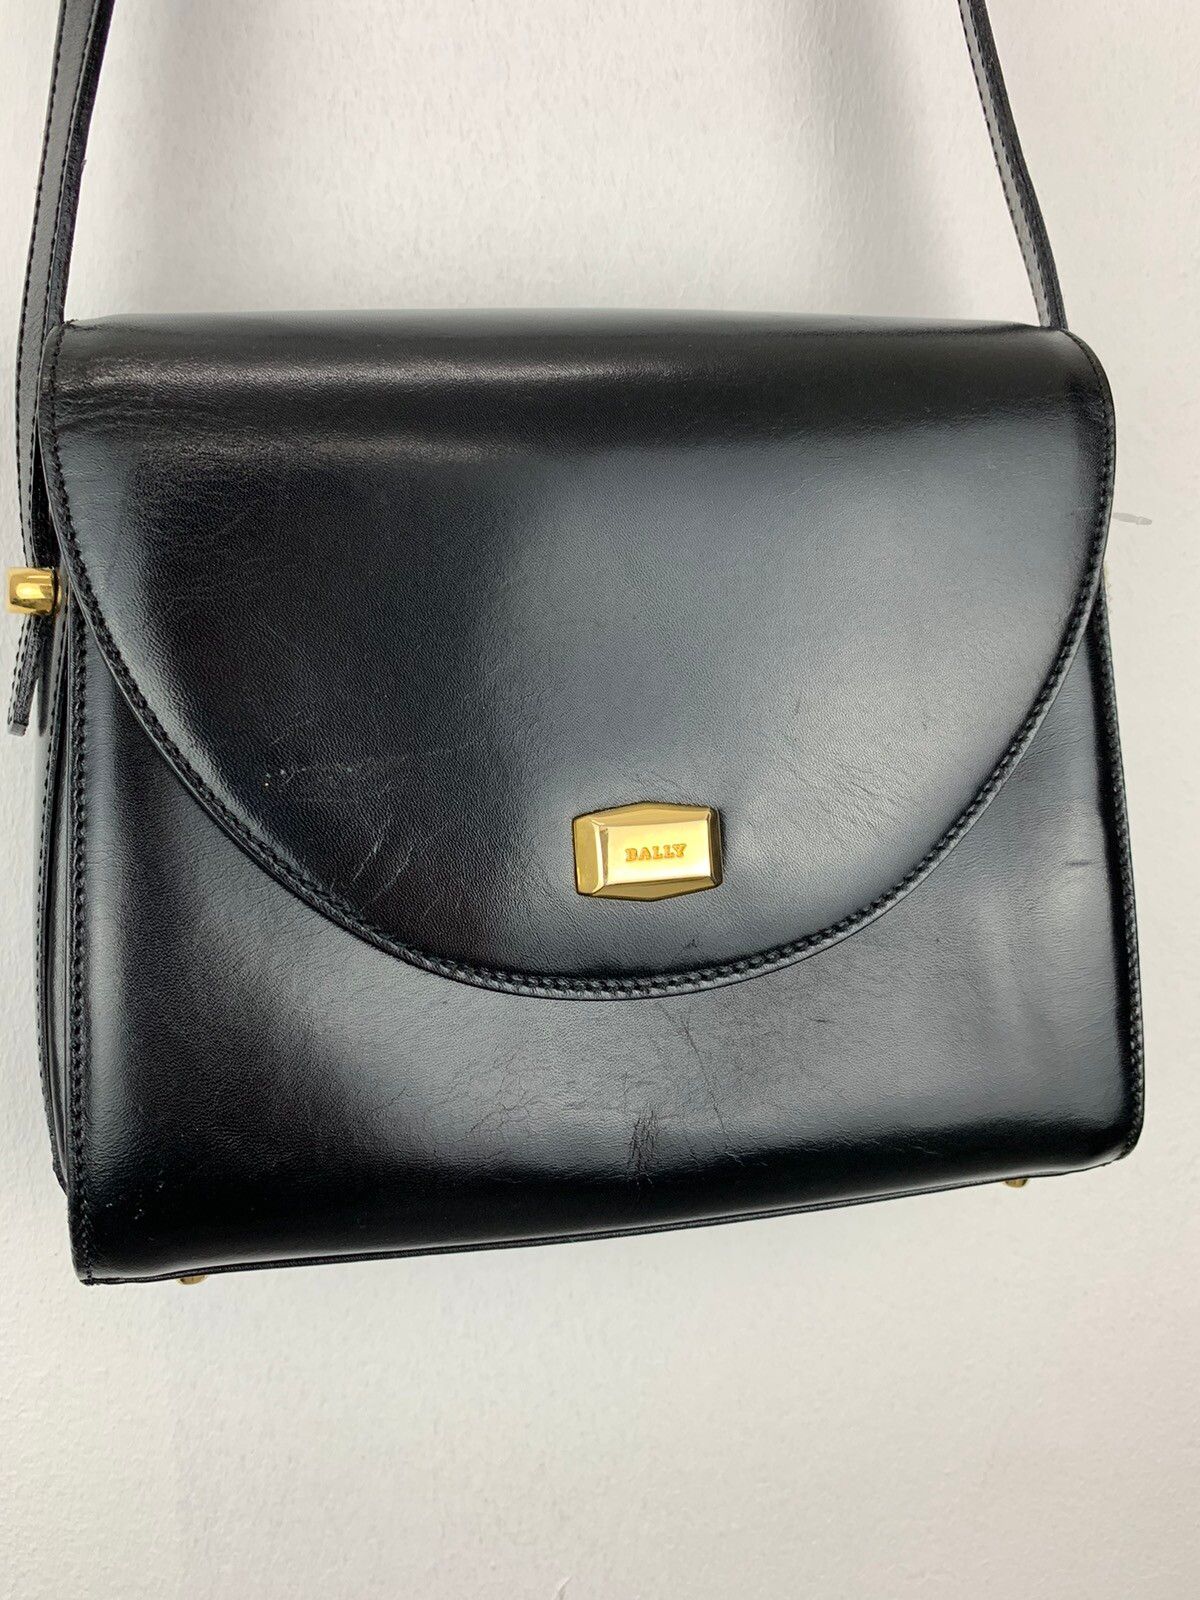 BALLY VINTAGE black leather hard shell bag antique bag Italy - 2